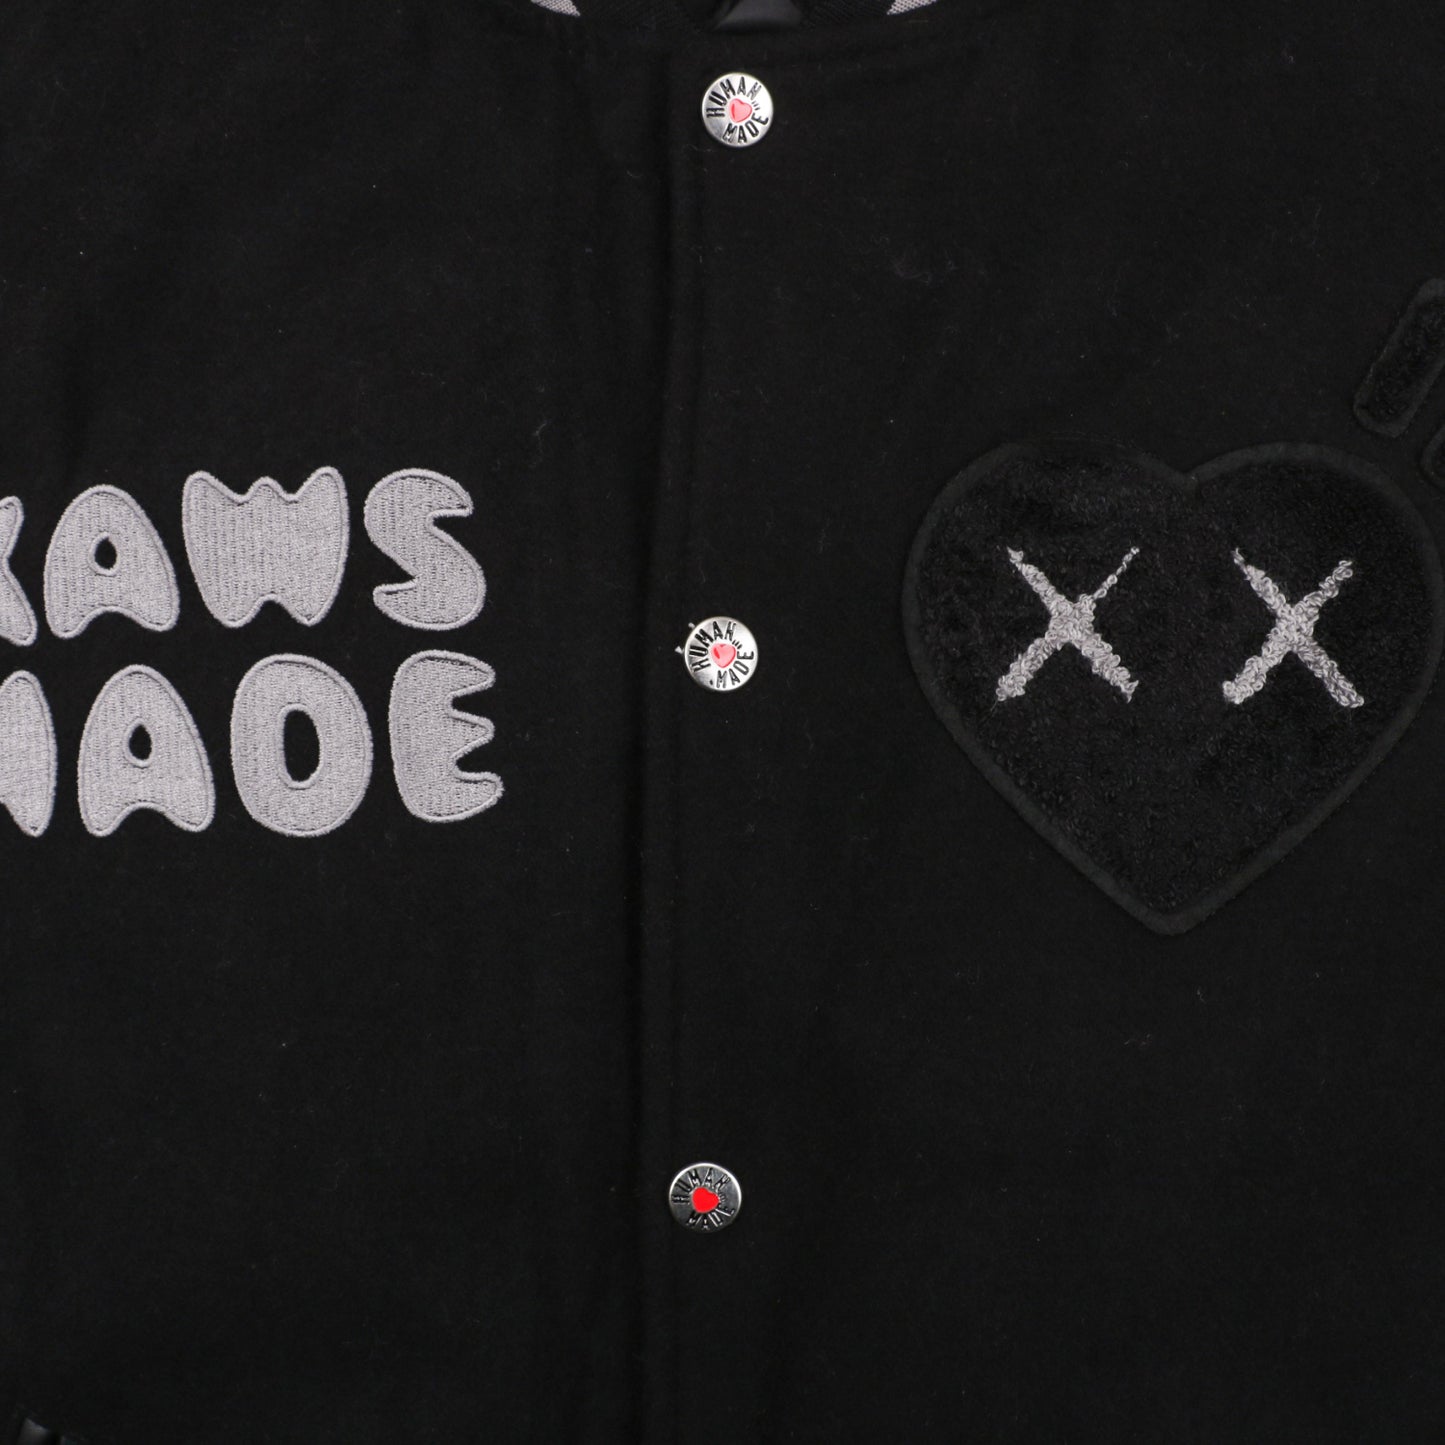 KAWS x Human Made Black Varsity Jacket